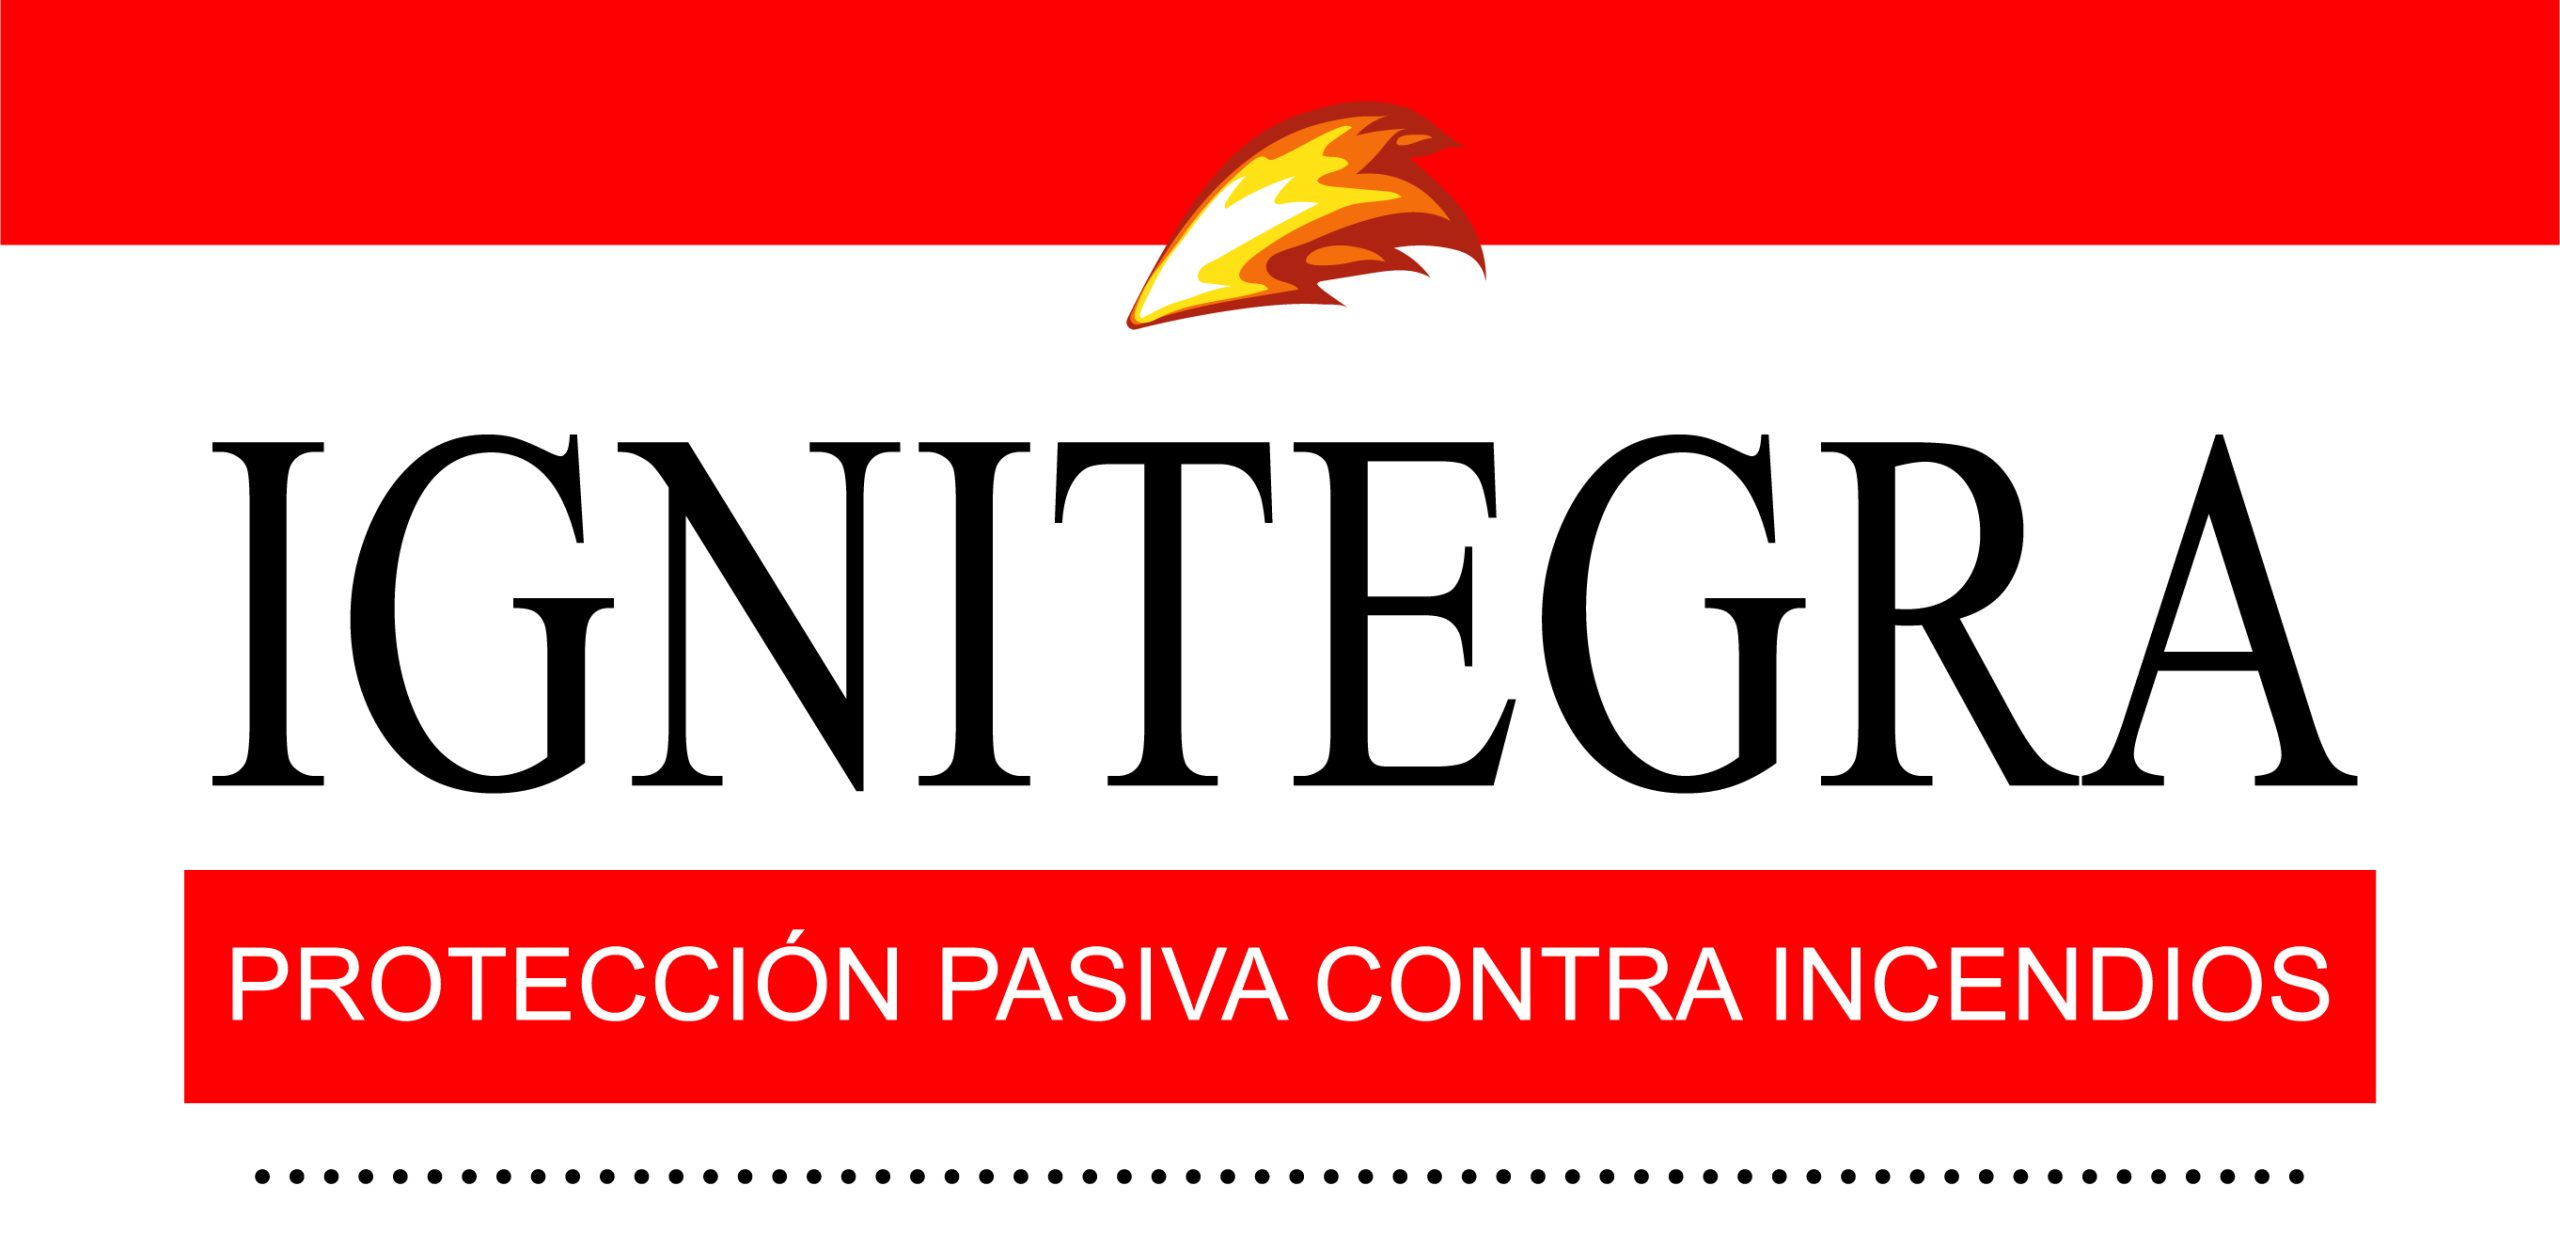 Logotipo Ignitegra